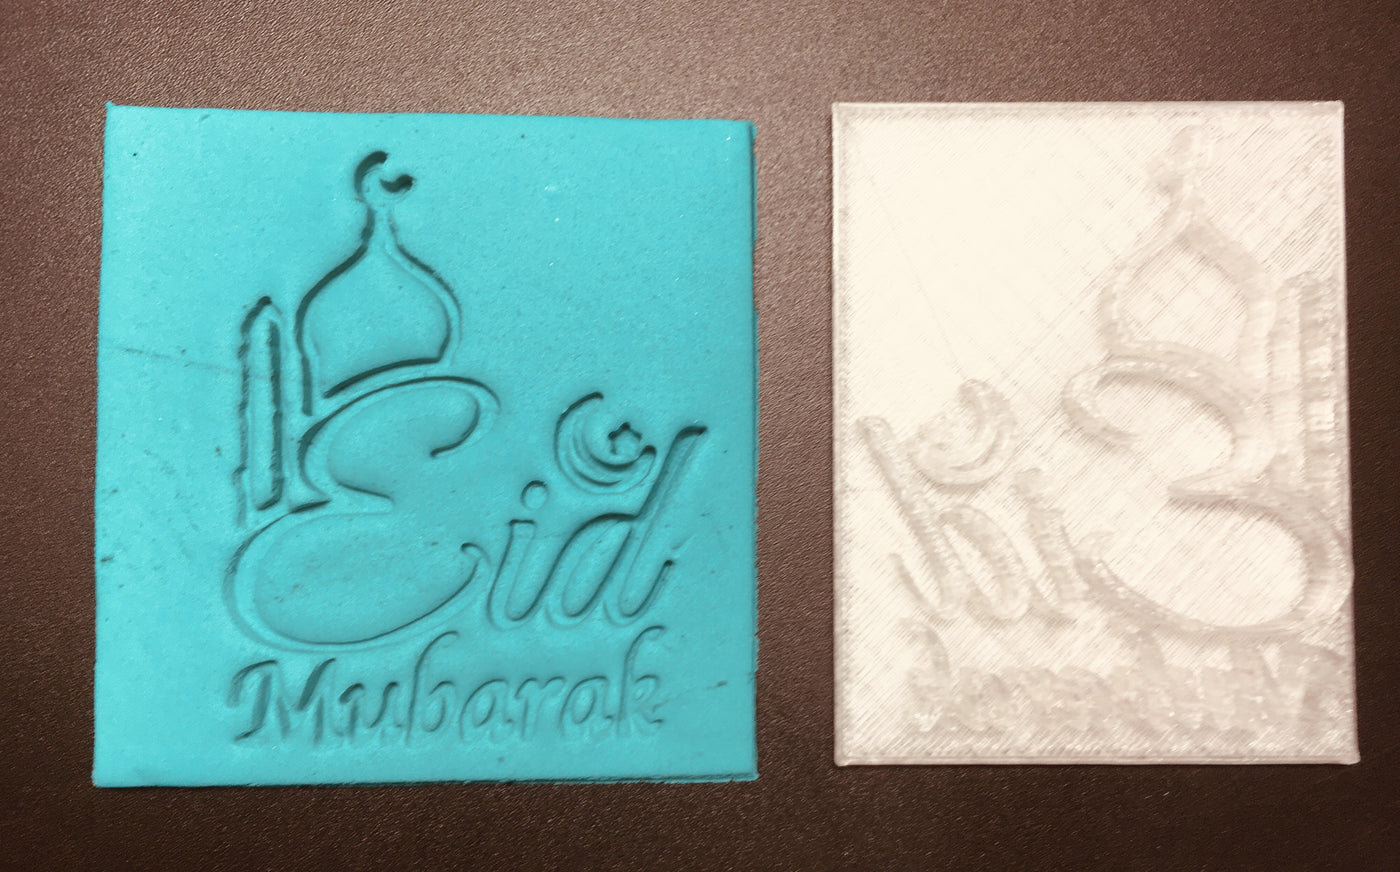 Al Eid Mubaruk Embosser stamp